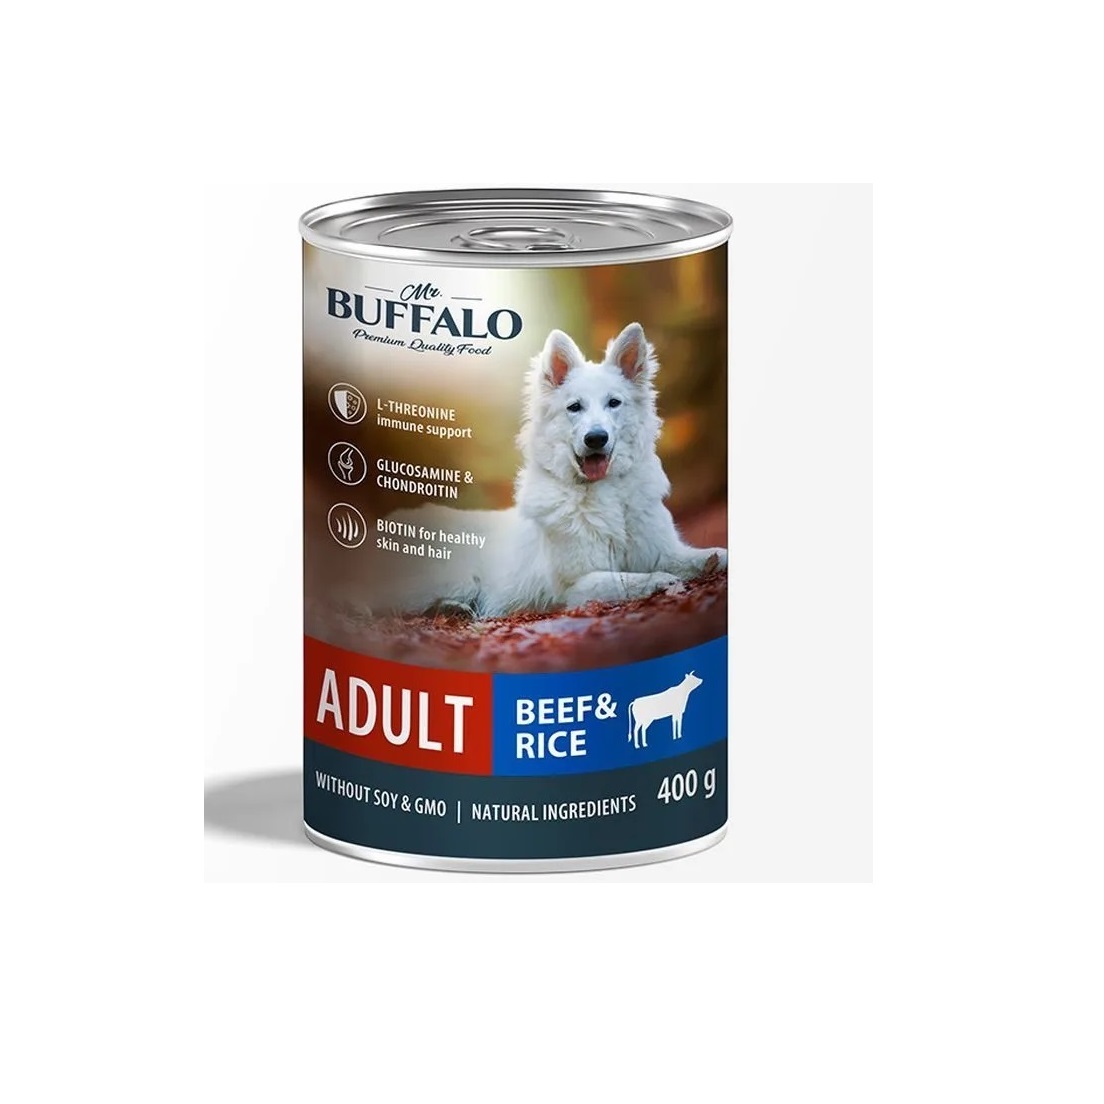 Мистер Буффало 400гр - Говядина/Рис - консервы для собак (Mr.Buffalo)